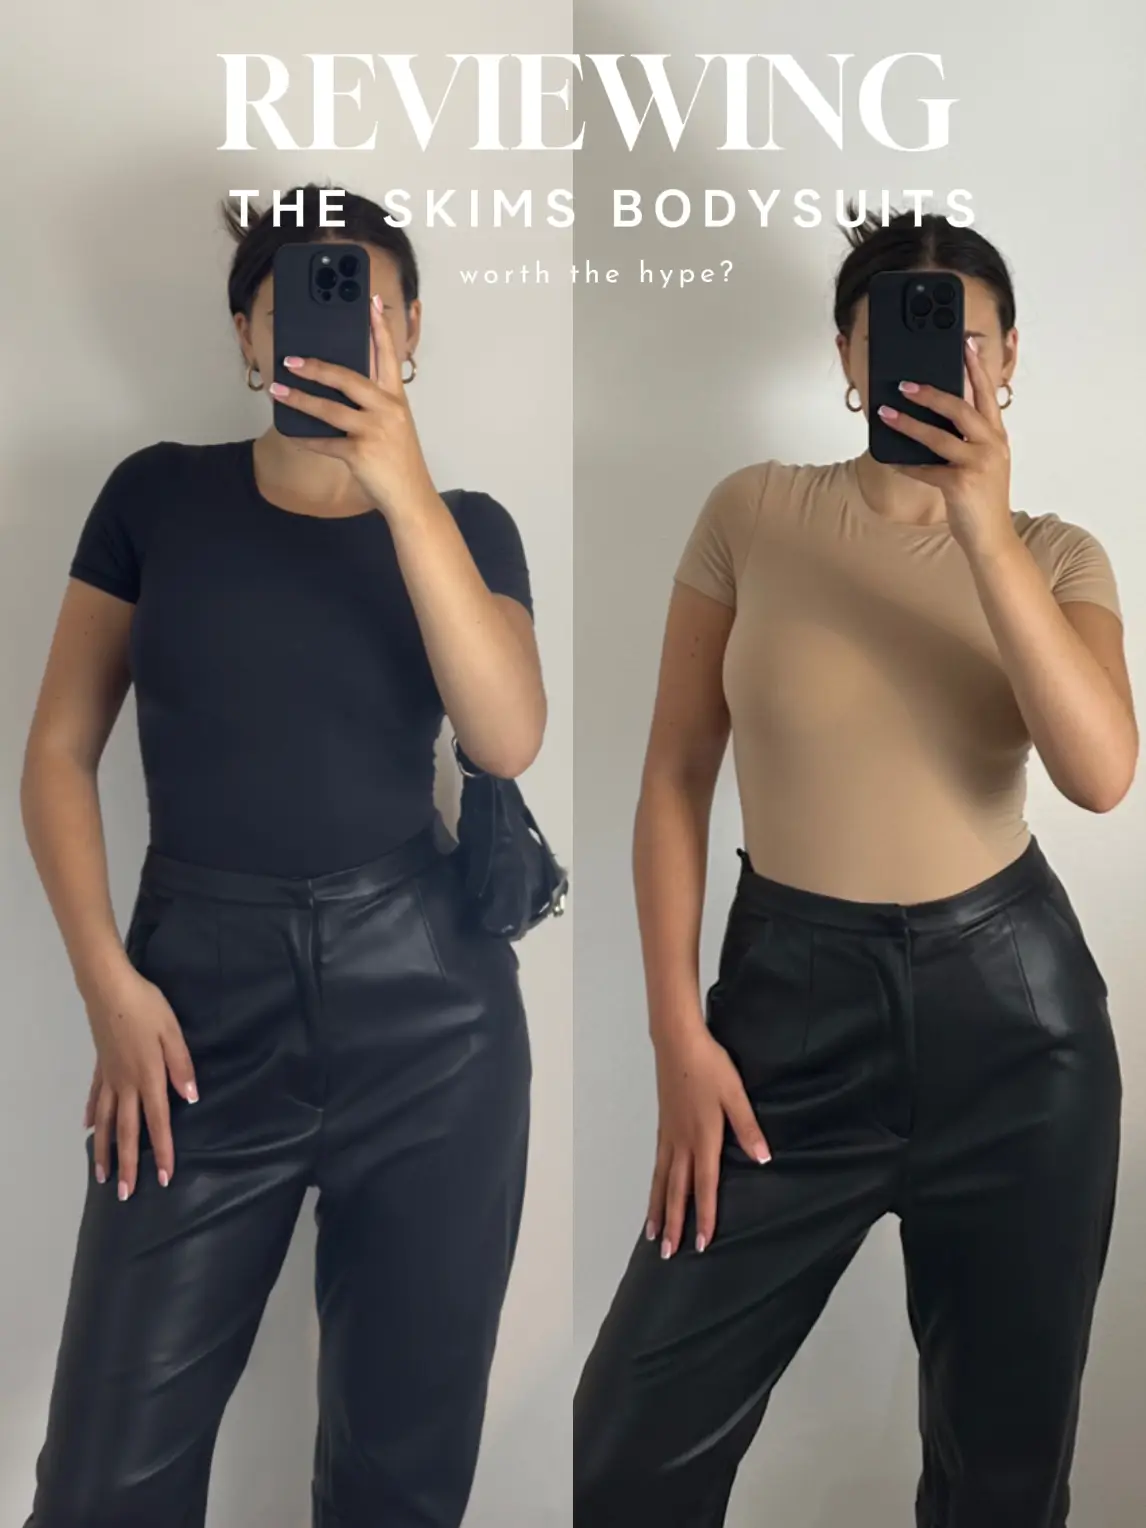 Skims bodysuit, is it worth the money?